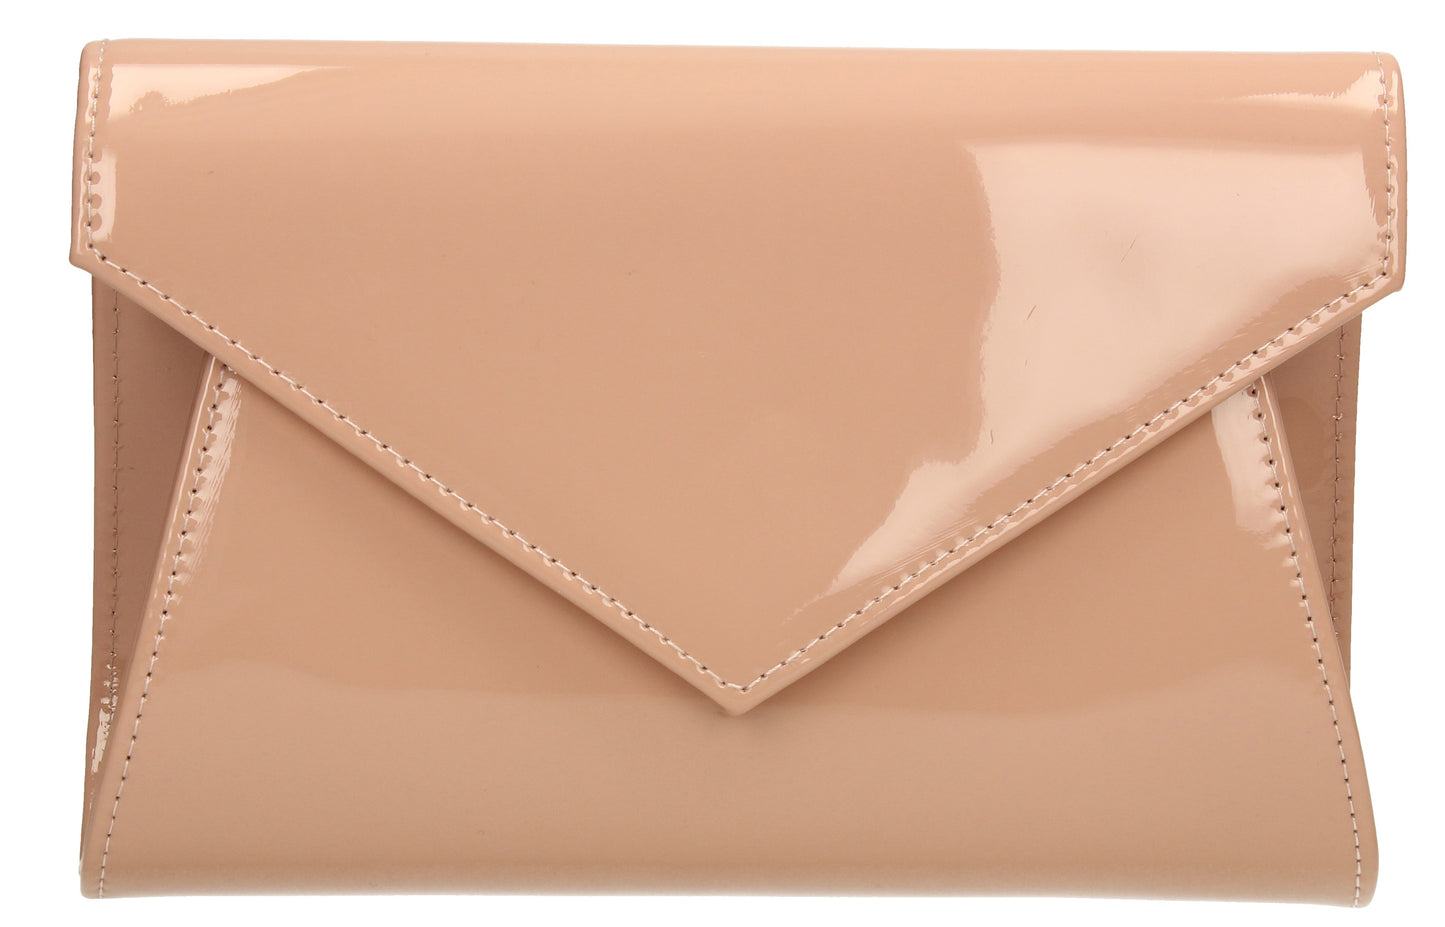 SWANKYSWANS Chrissy Envelope Clutch Bag Pink Beige Cute Cheap Clutch Bag For Weddings School and Work